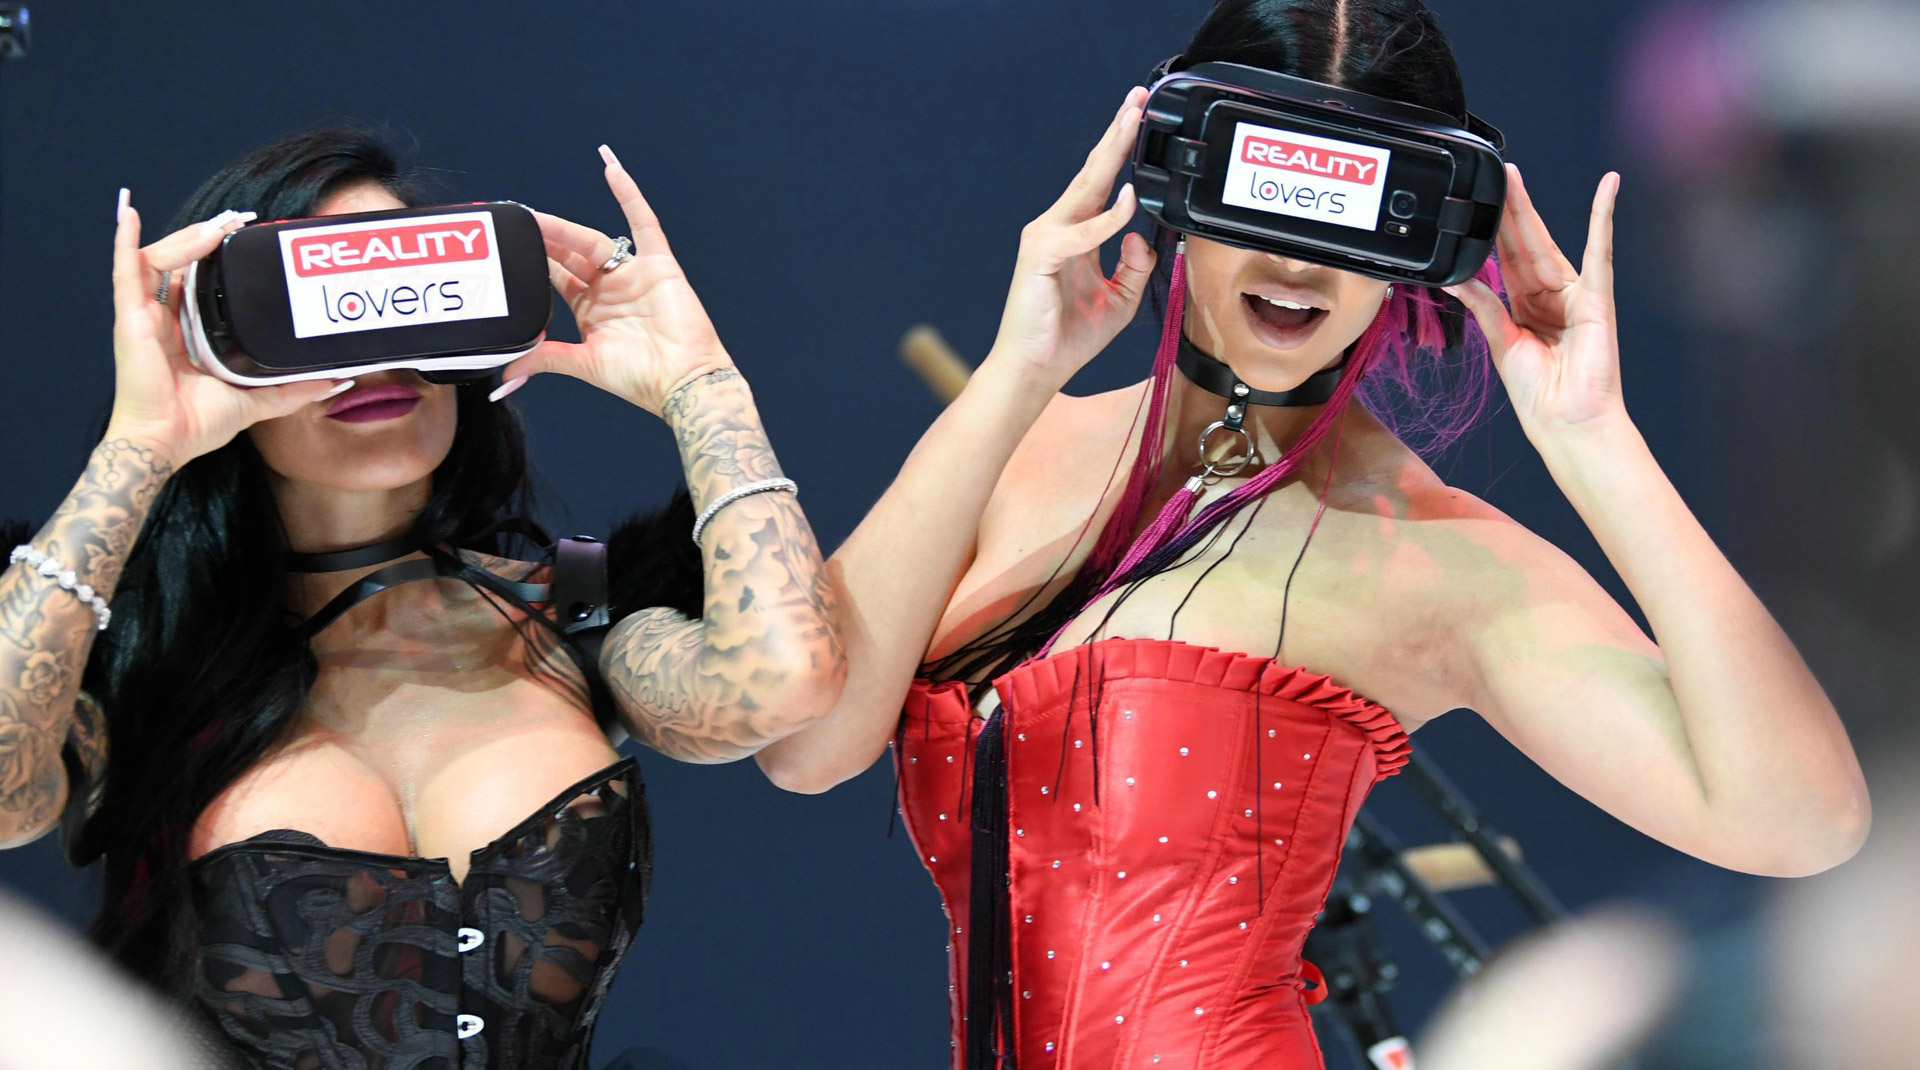 VR虚拟现实技术在情趣用品应用广泛。两位模特正在观看VR视频。